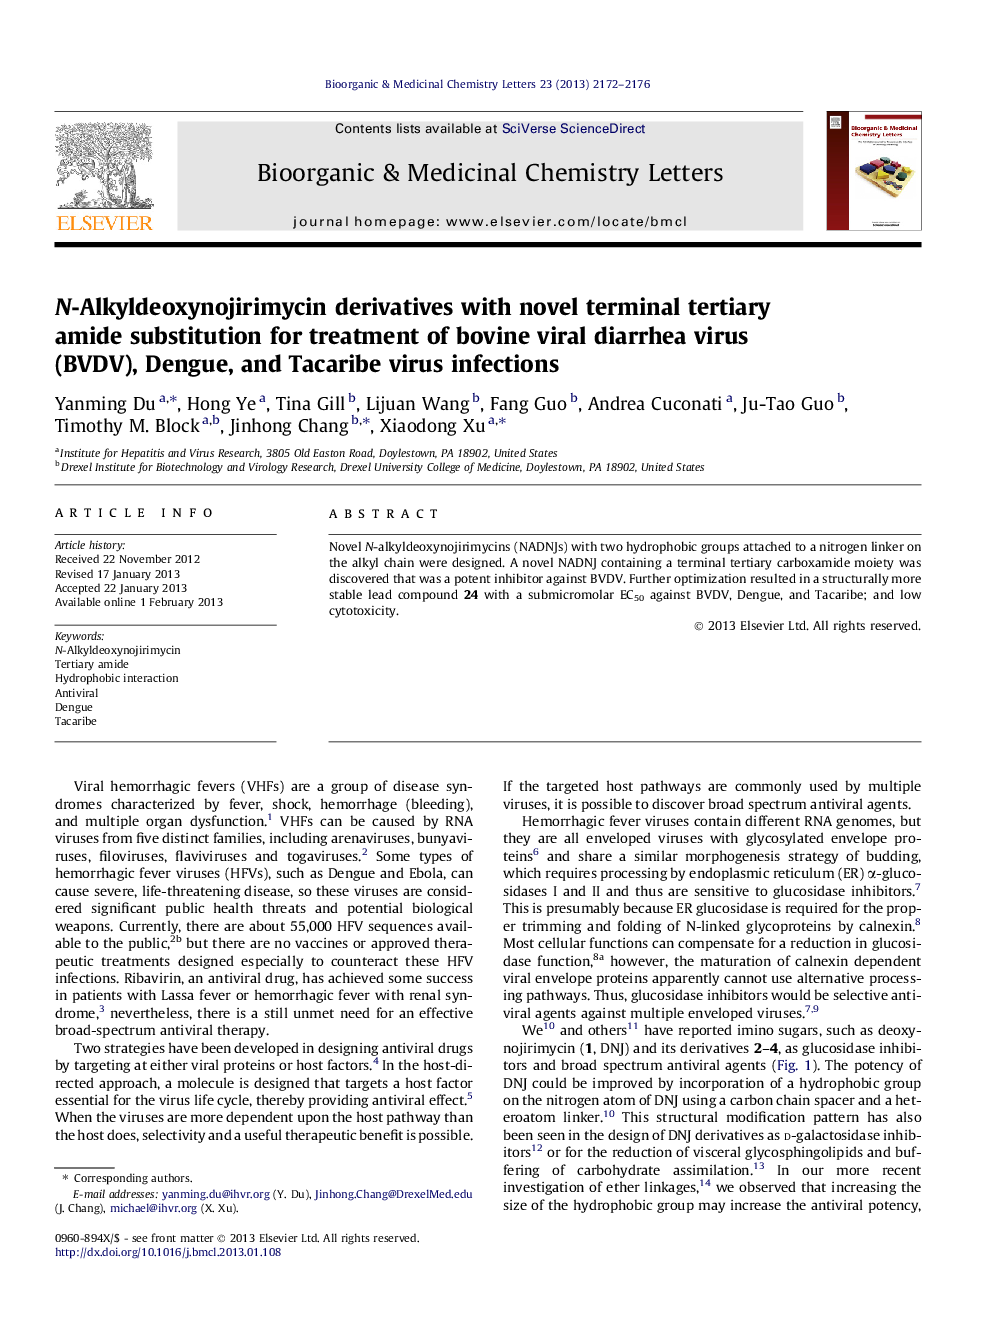 N-Alkyldeoxynojirimycin derivatives with novel terminal tertiary amide substitution for treatment of bovine viral diarrhea virus (BVDV), Dengue, and Tacaribe virus infections